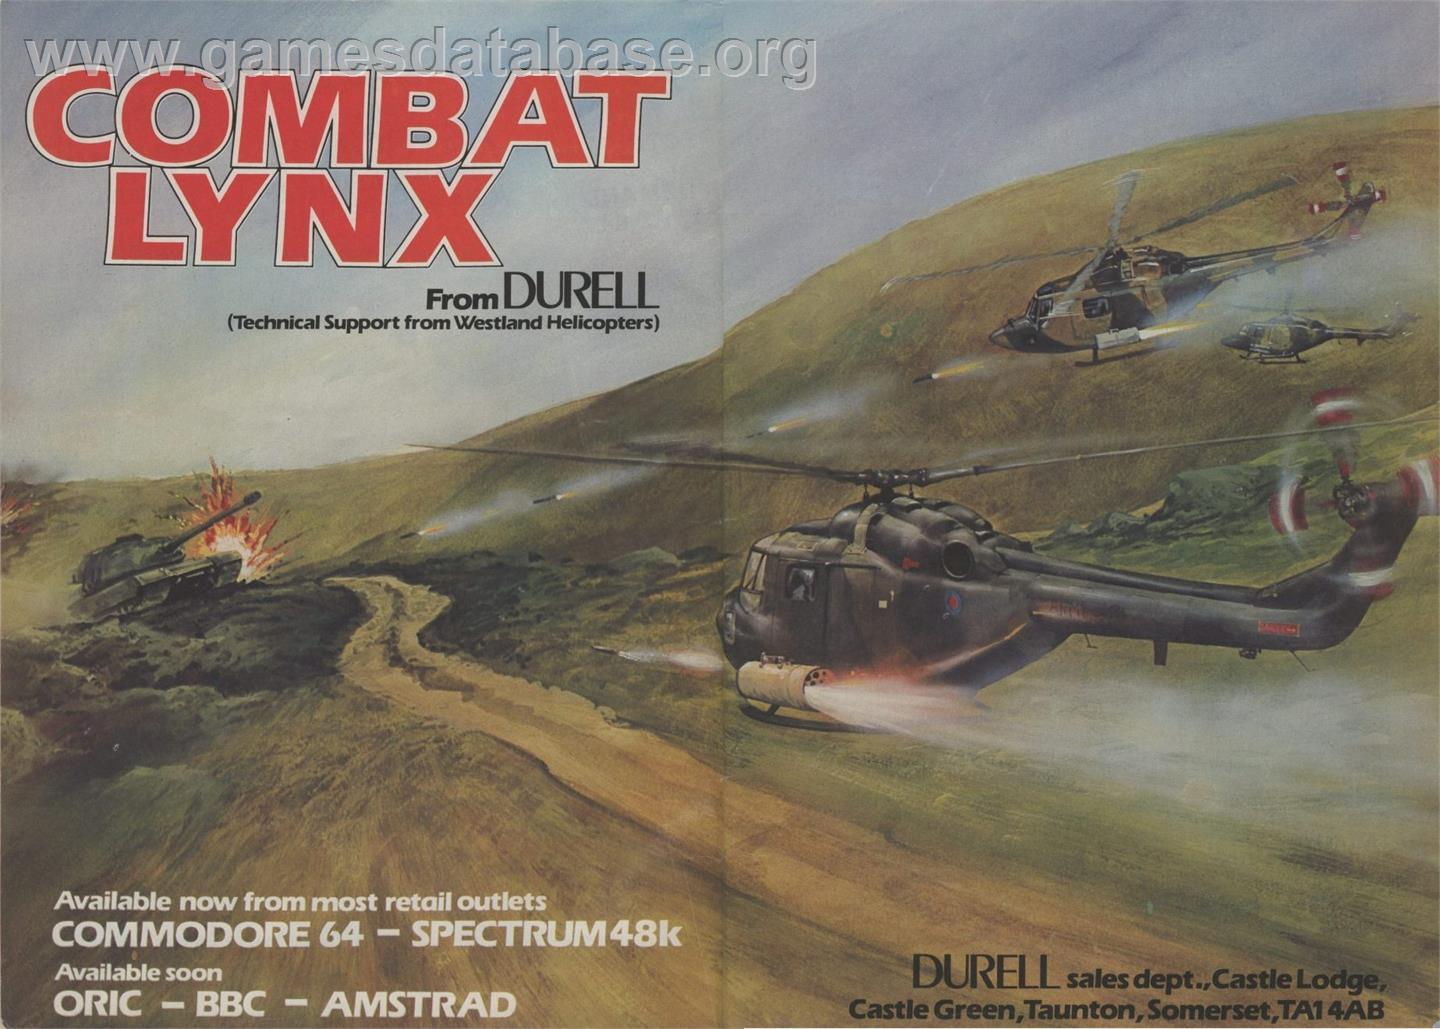 Combat Lynx - Commodore 64 - Artwork - Advert